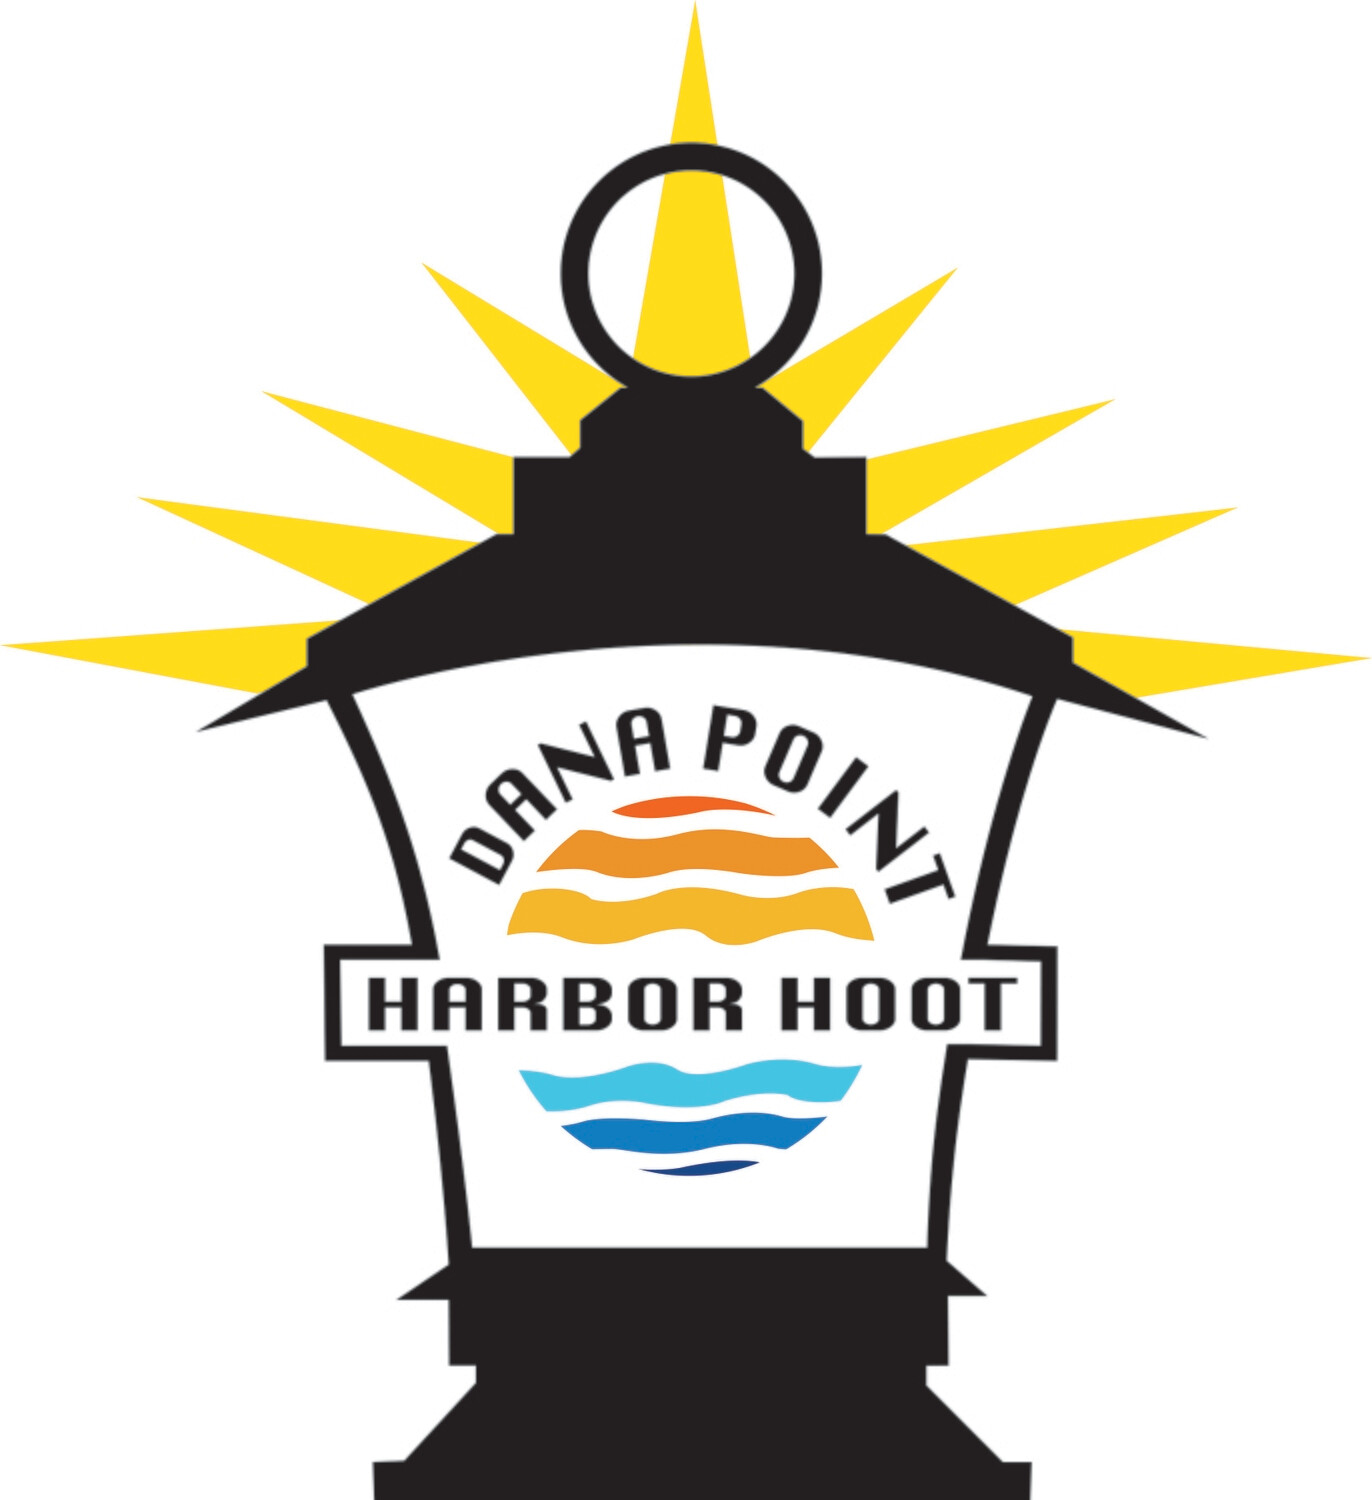 4th Annual Dana Point Harbor Hoot